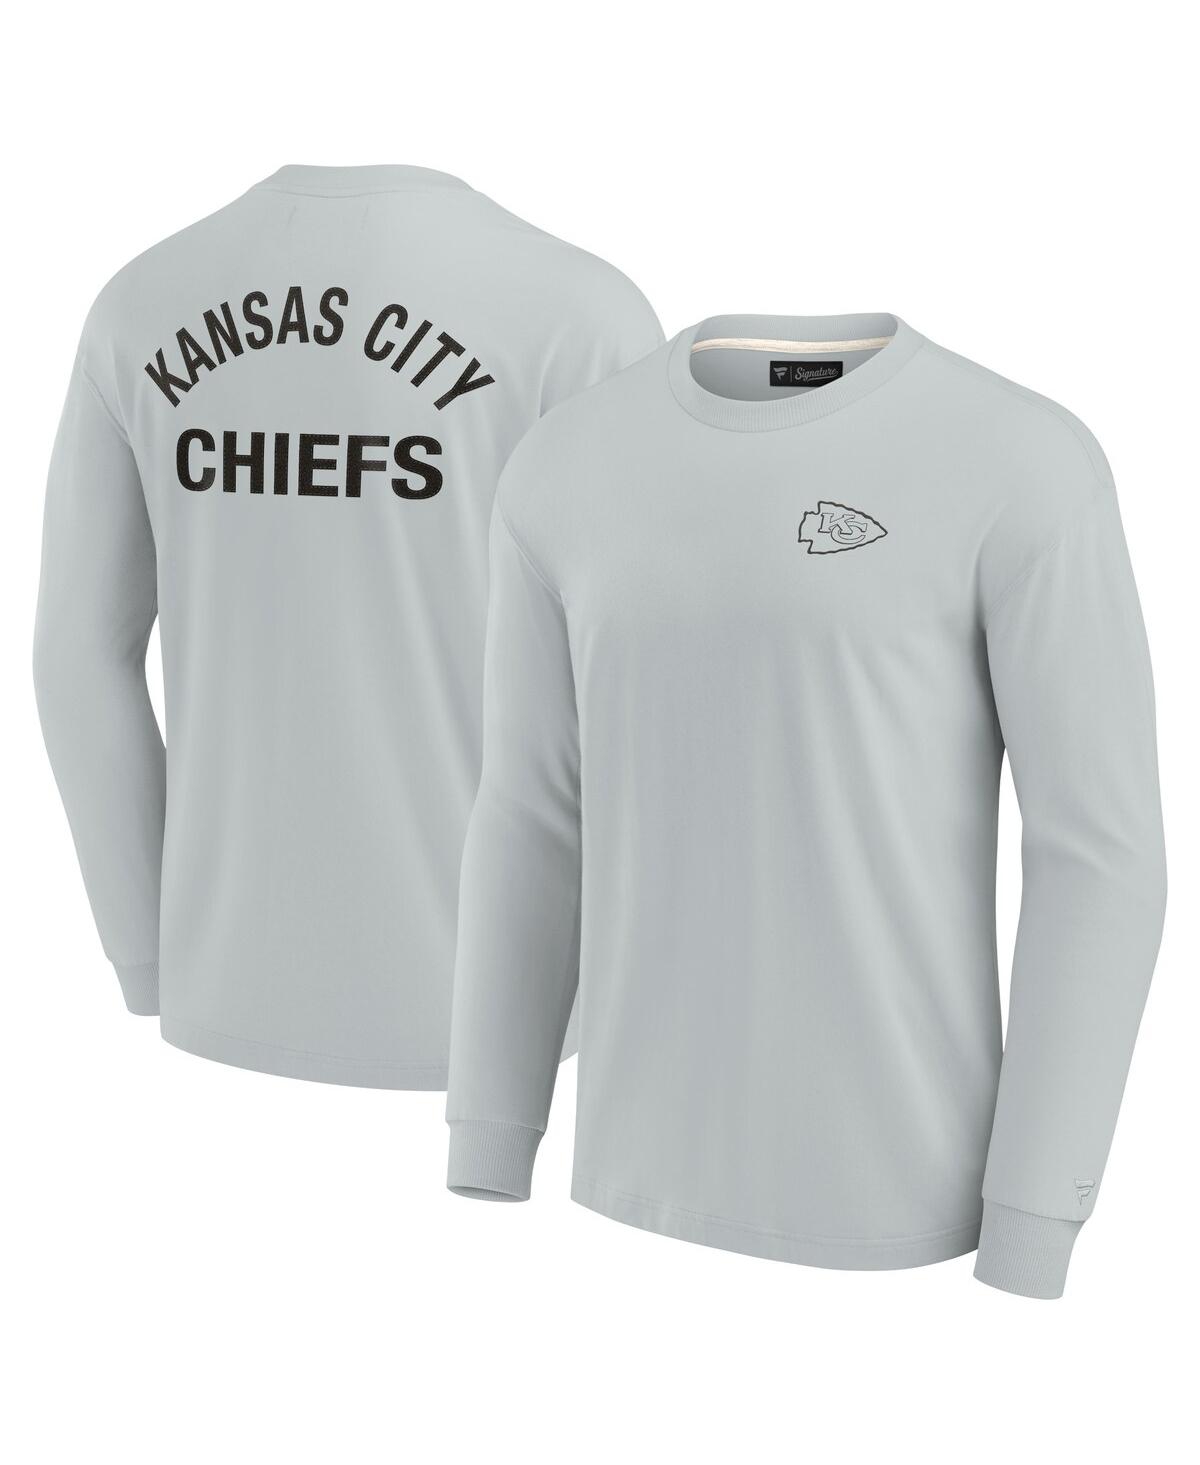 Men's and Women's Fanatics Signature Gray Kansas City Chiefs Super Soft Long Sleeve T-shirt - Gray